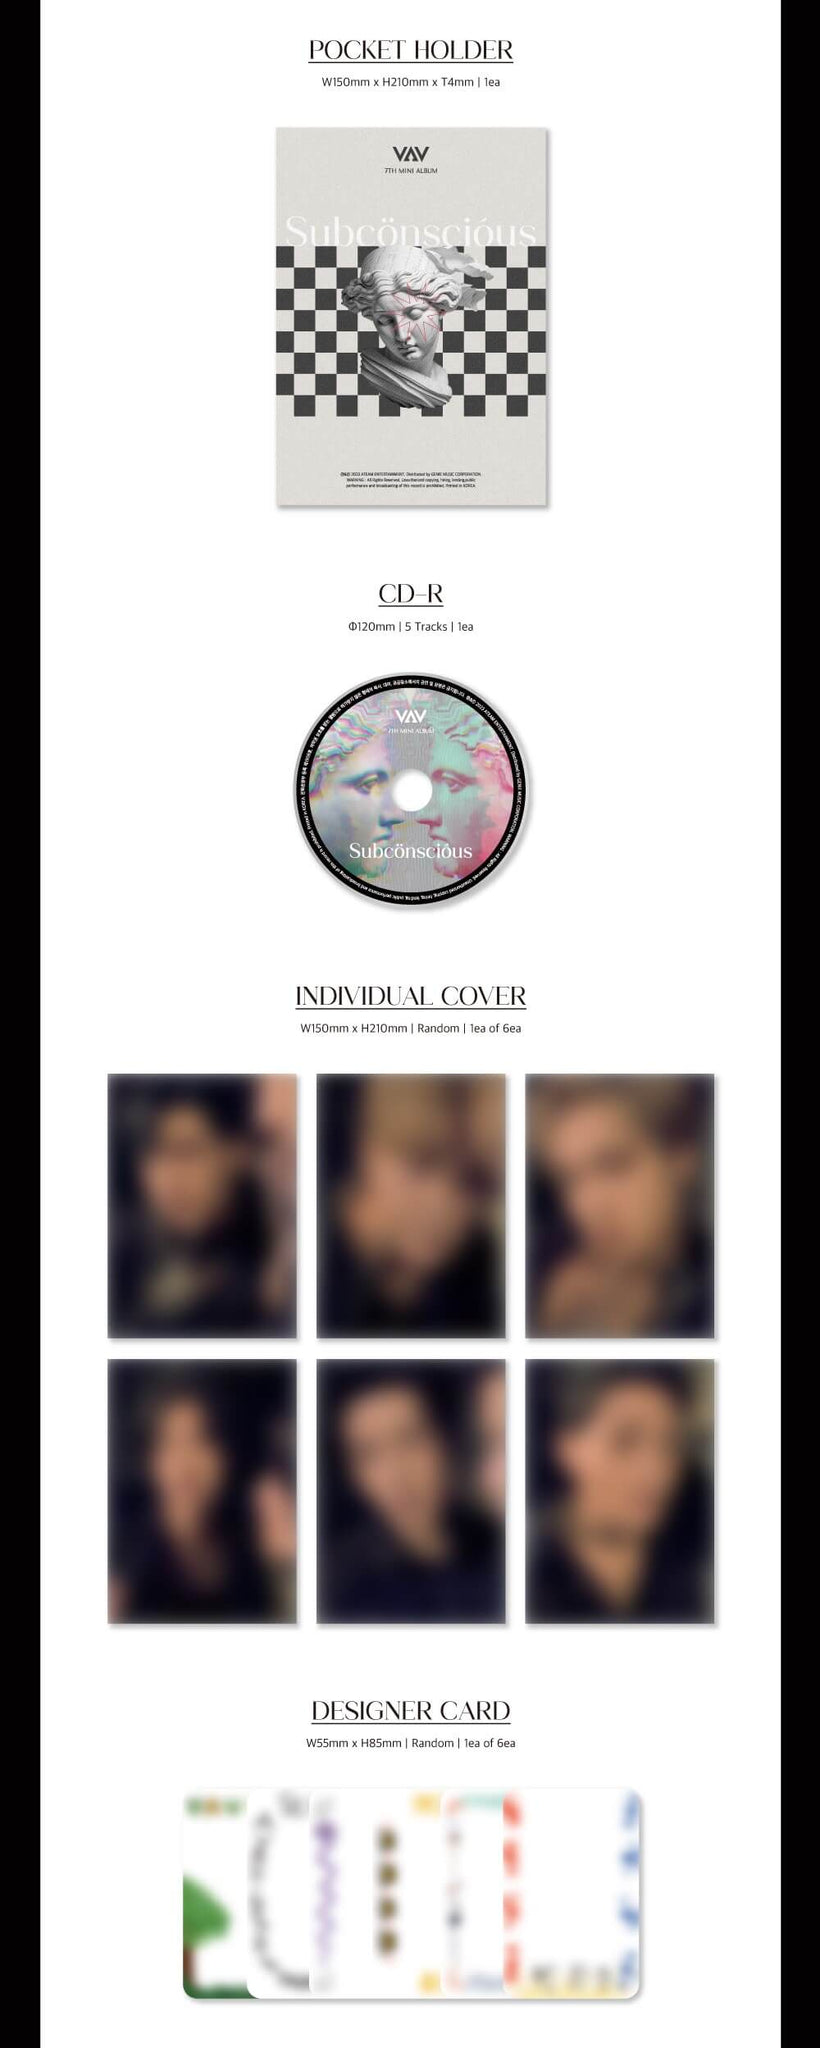 VAV 7th Mini Album Subconscious Inclusions Pocket Holder CD Individual Cover Desiger Card